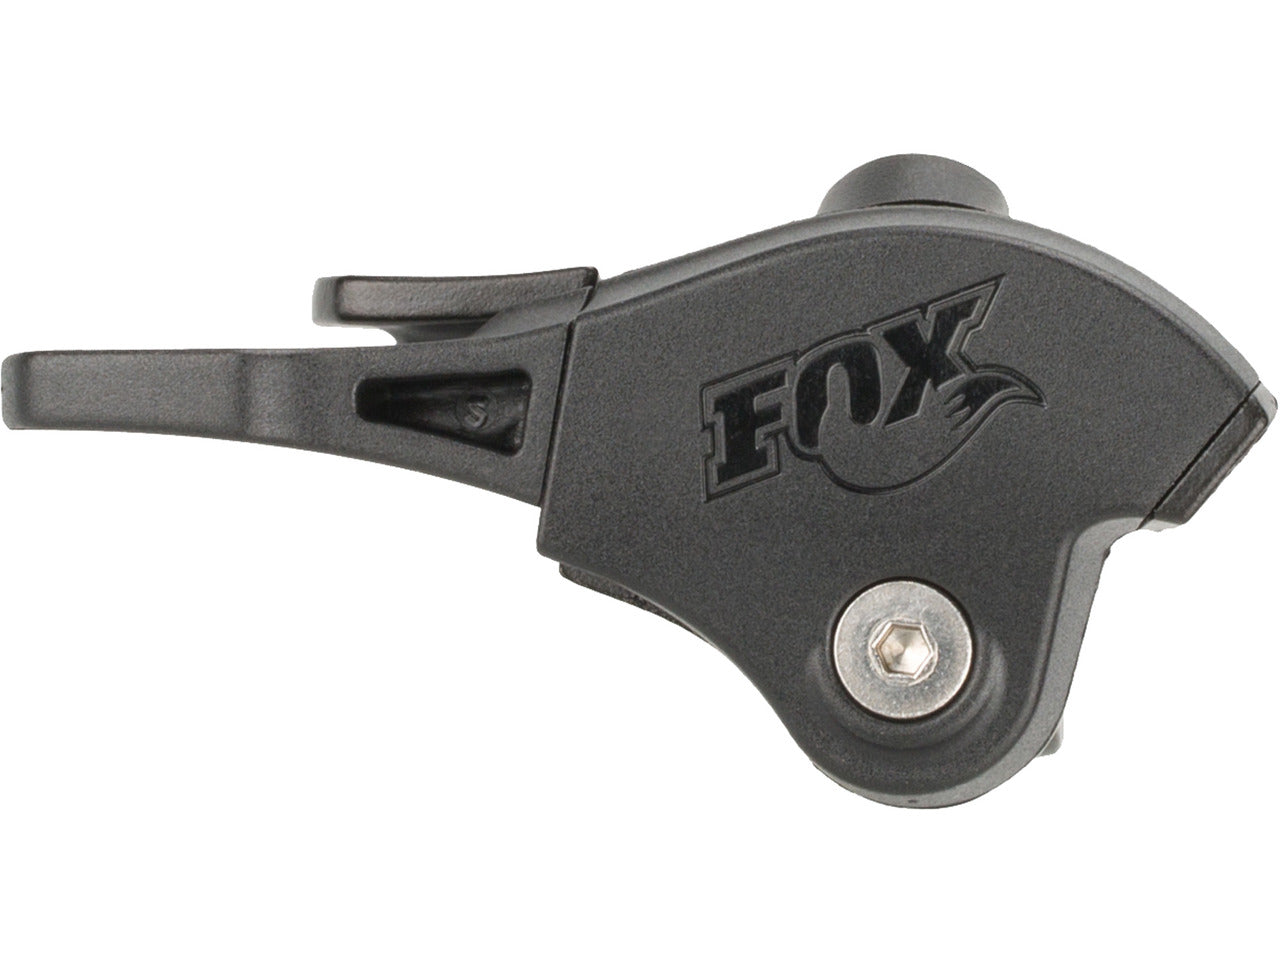 Fox Racing Shox Two Position Remote Hebel - Premium Bikeshop